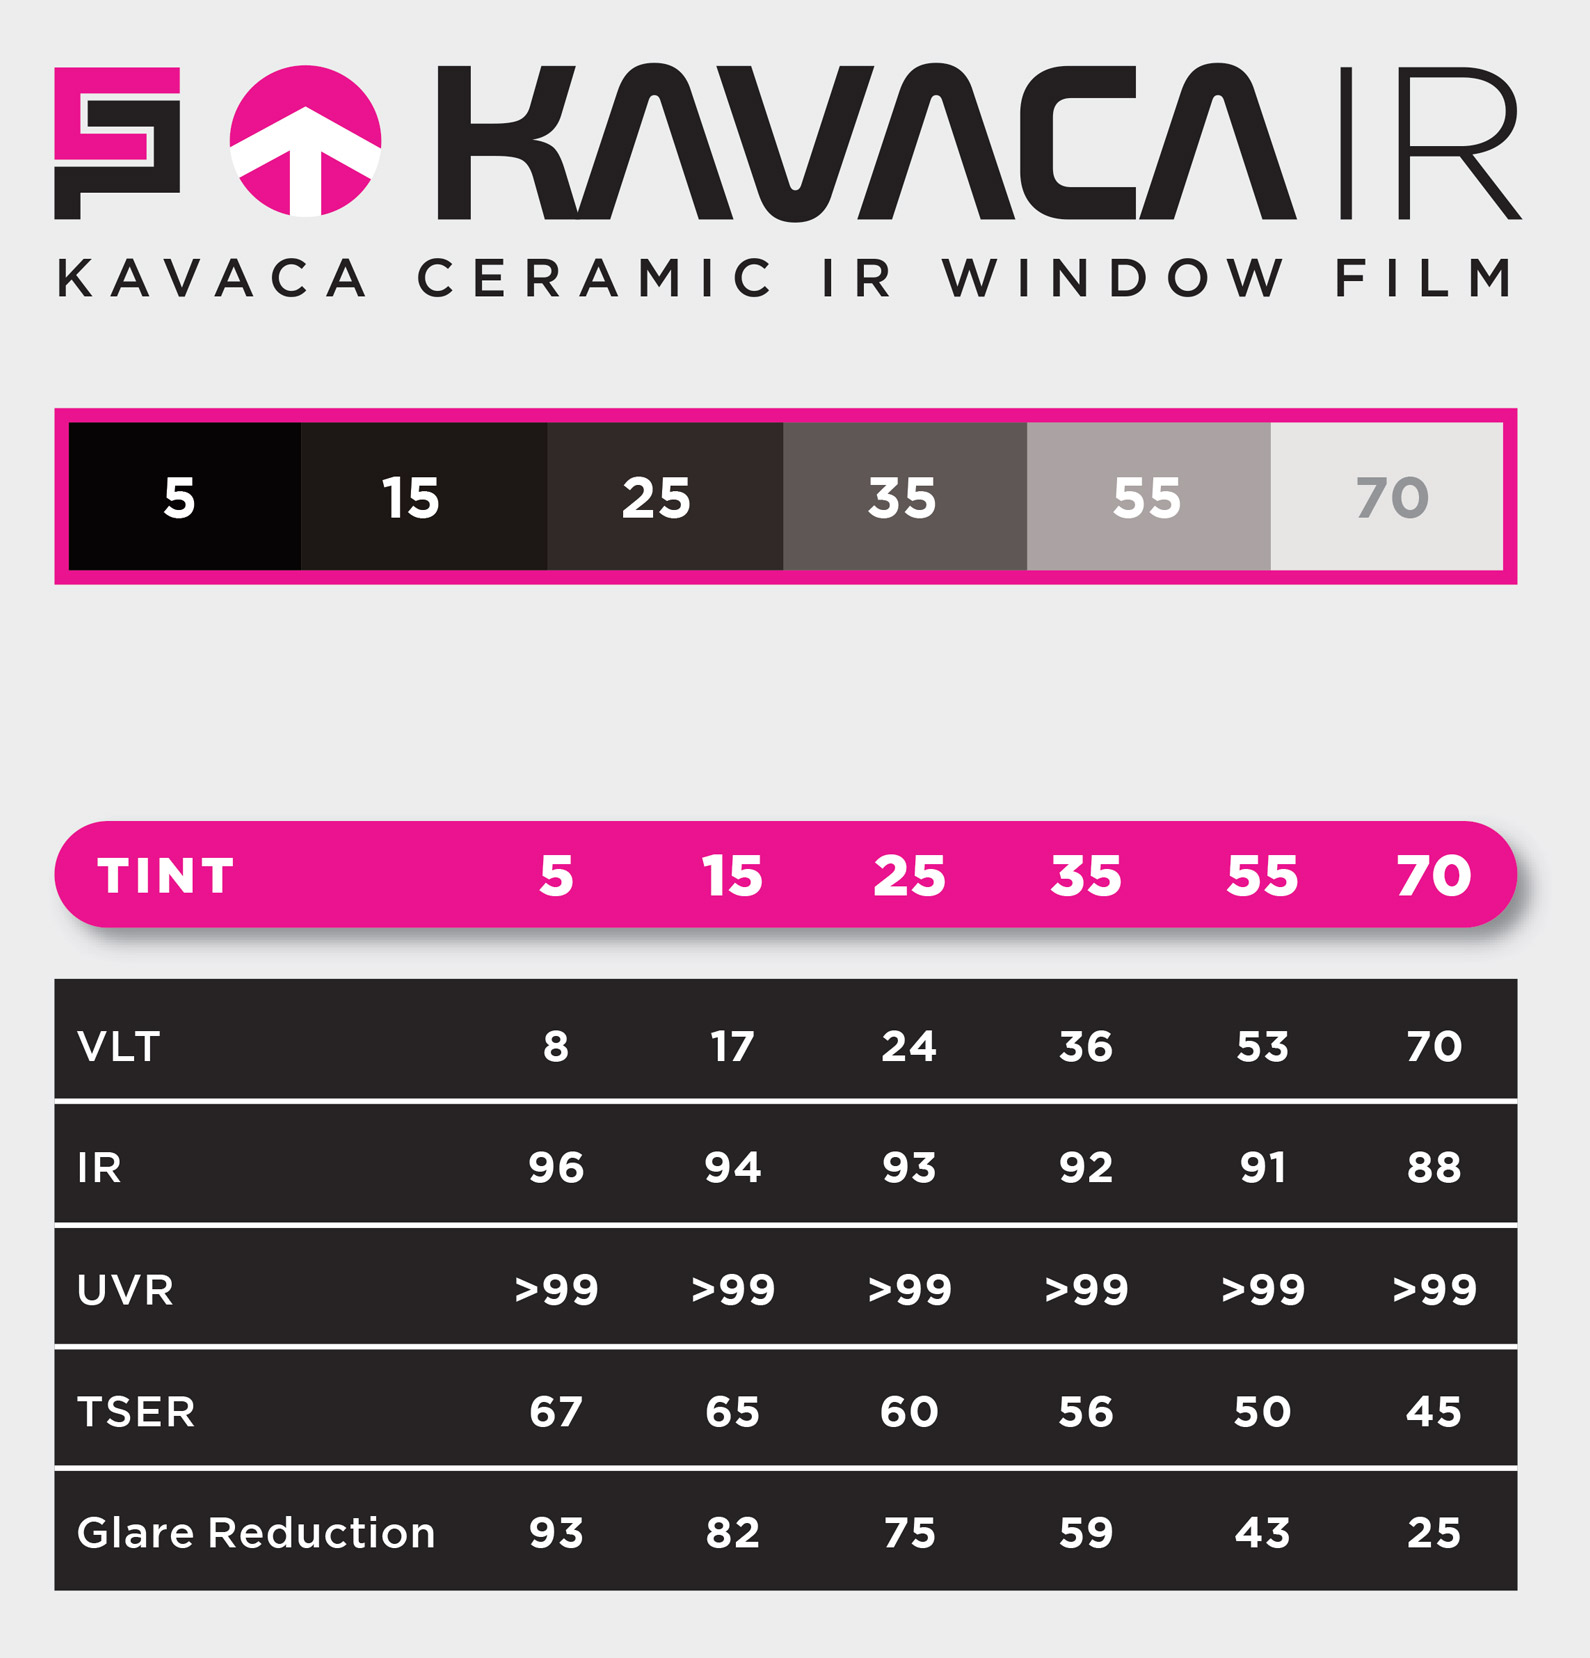 Ceramic Pro Kavaca Keramisk IR-fönsterfärgfilm Specifikation